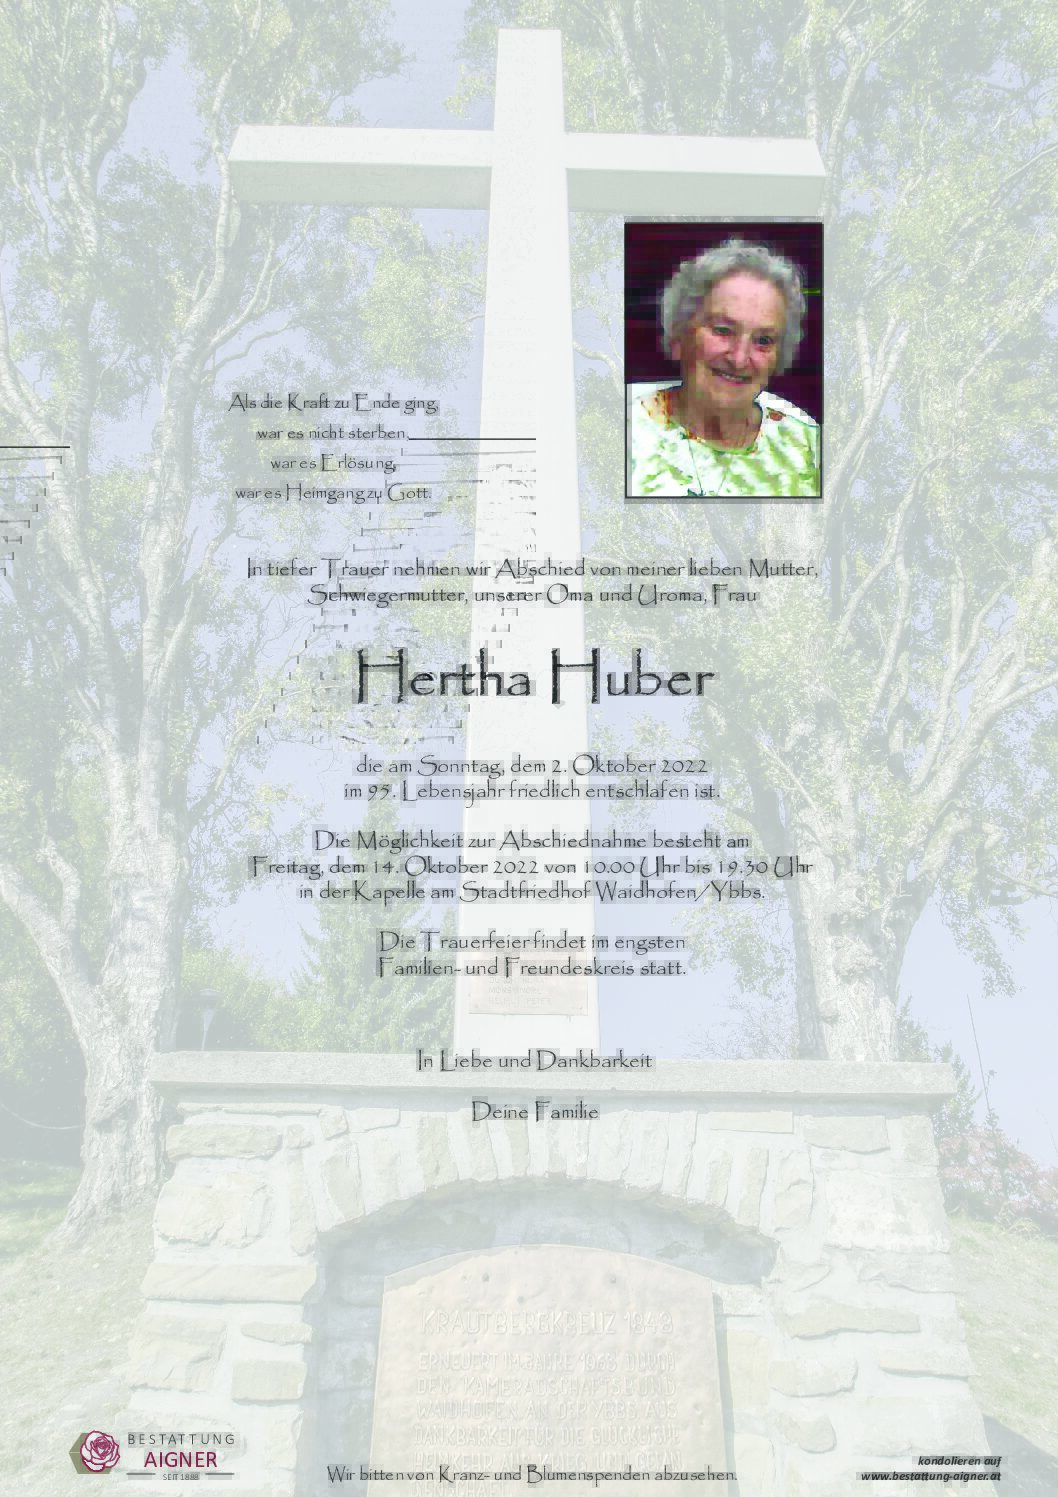 Hertha Huber